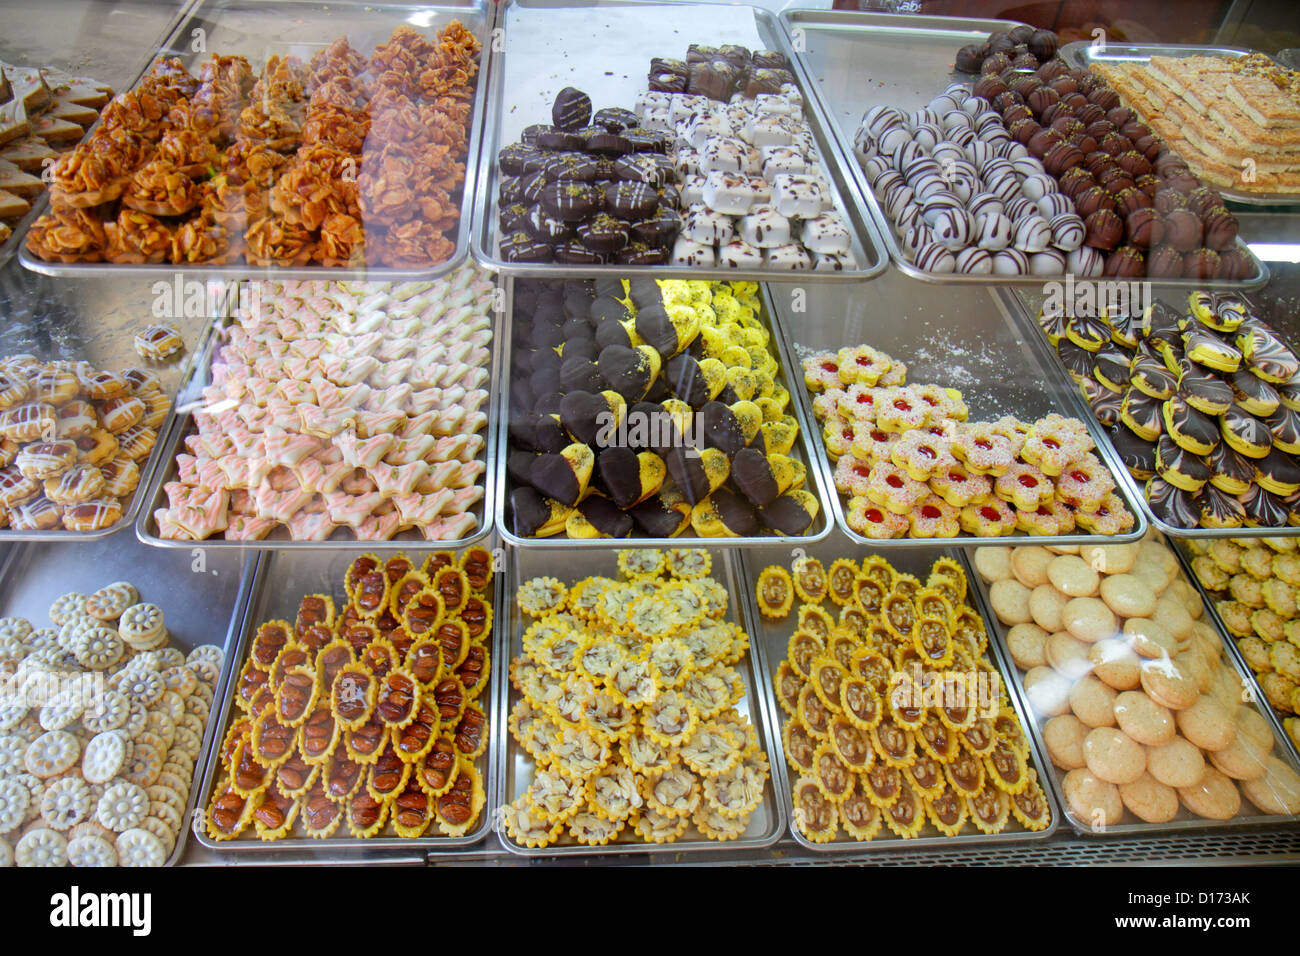 Dubai UAE,United Arab Emirates,Deira,Al Rigga,Abshar Iranian Sweets,desserts,treats,cookies,candies,baked goods,pastries,cakes,display case,UAE1210110 Stock Photo